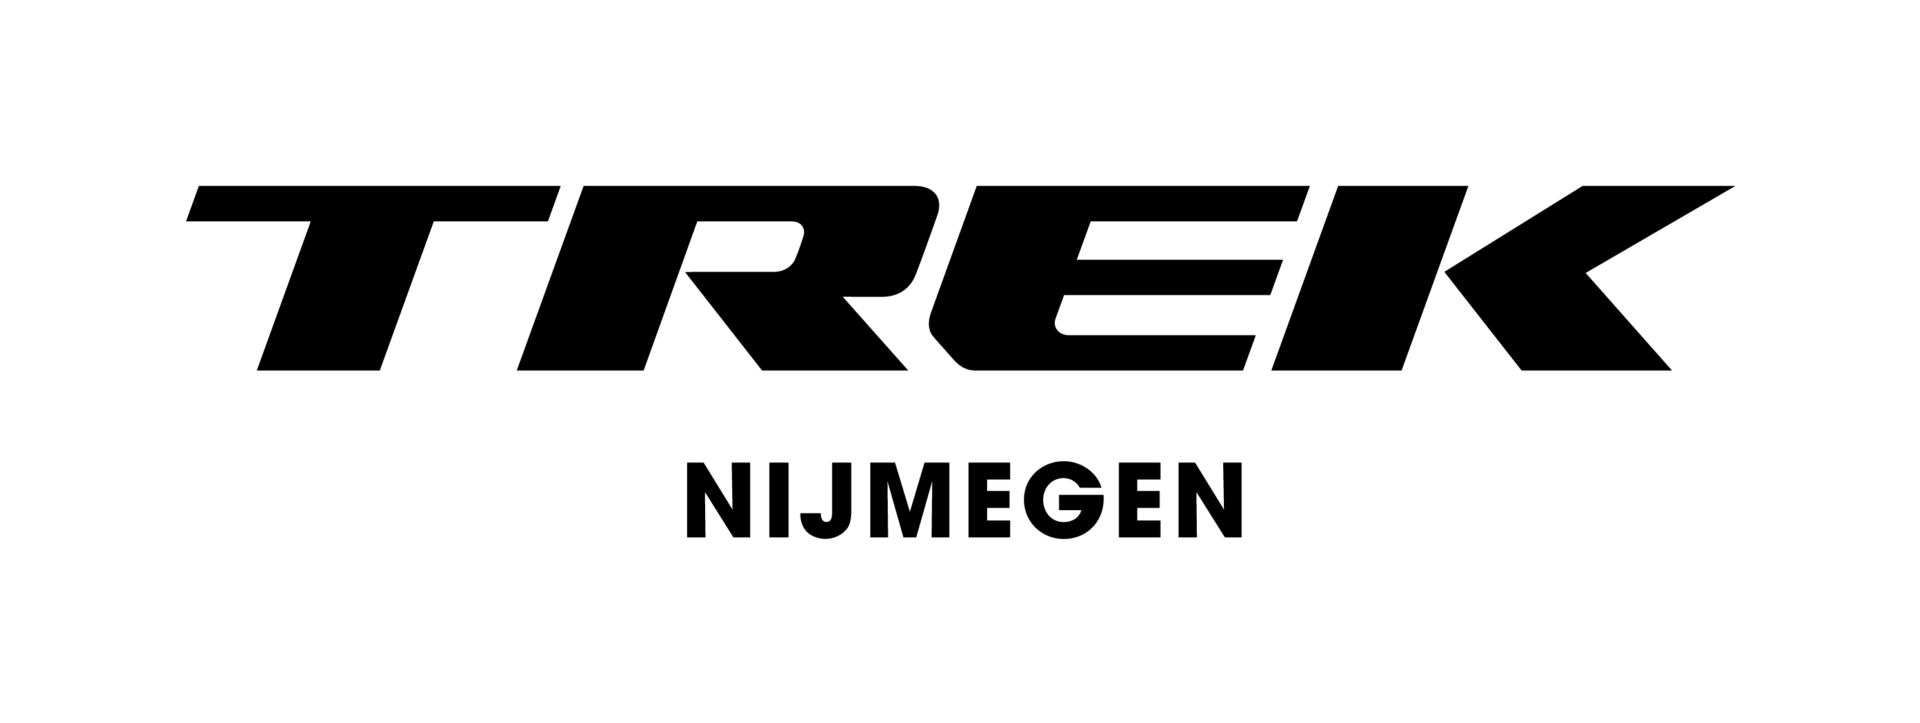 2018_Trek_logo_location_Nijmegen_black